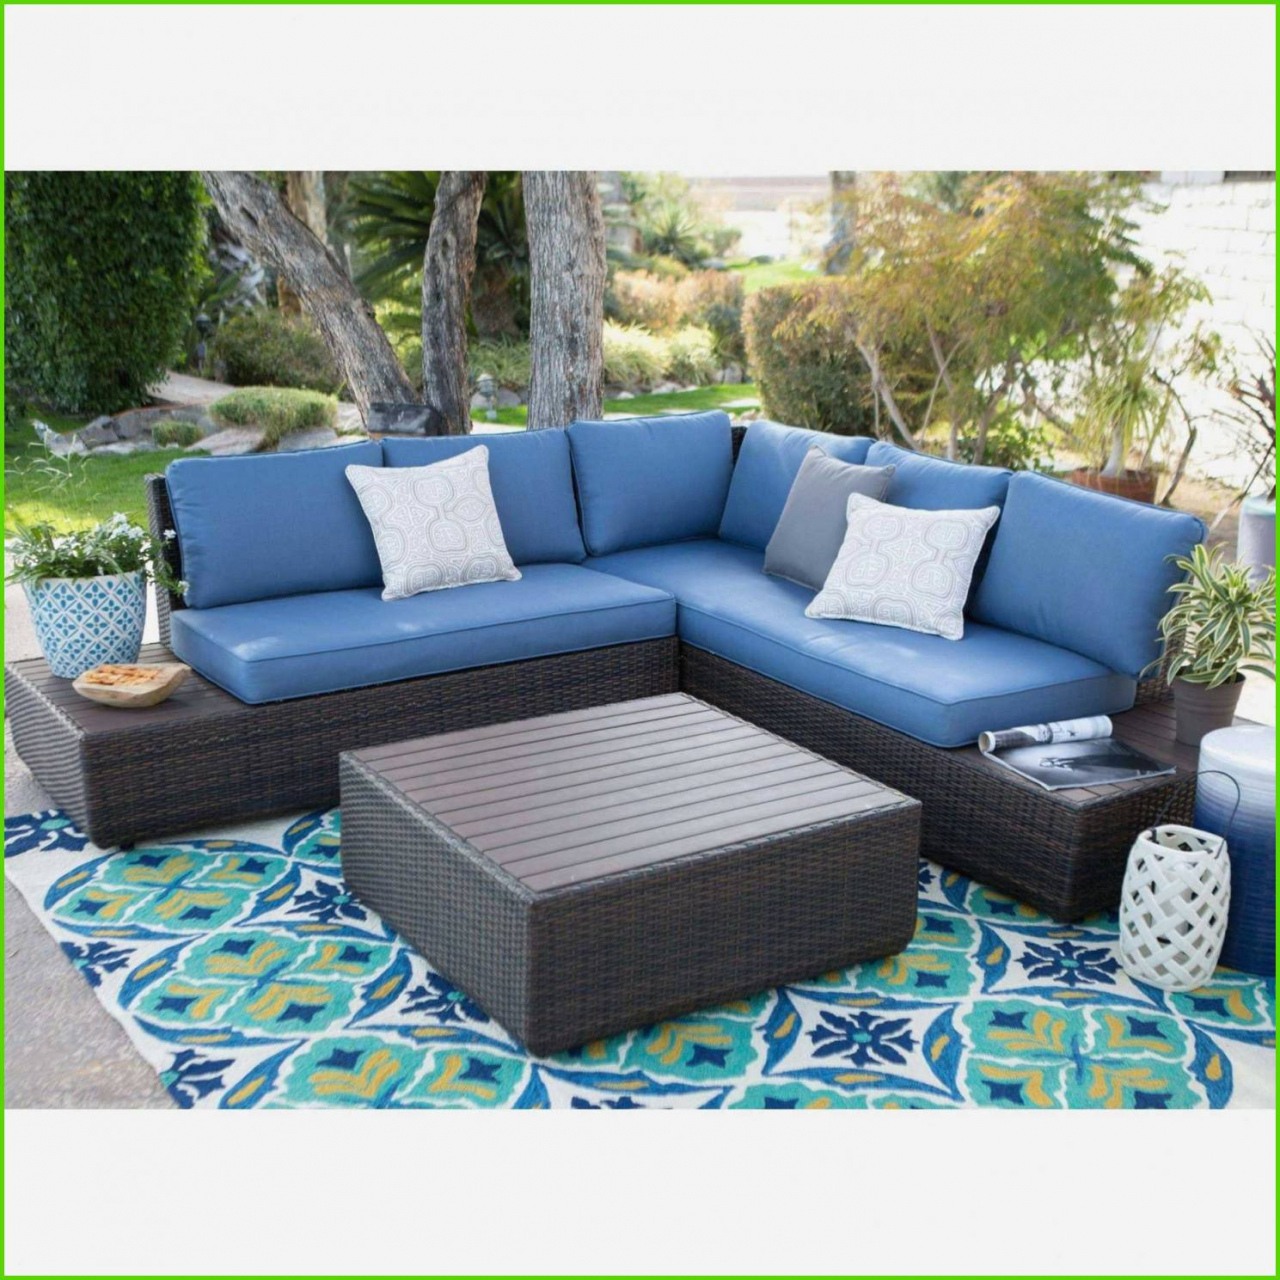 Gartenlounge Aluminium Neu Outdoor Daybed Lounge sofa Garten Rattan Garten Lounge